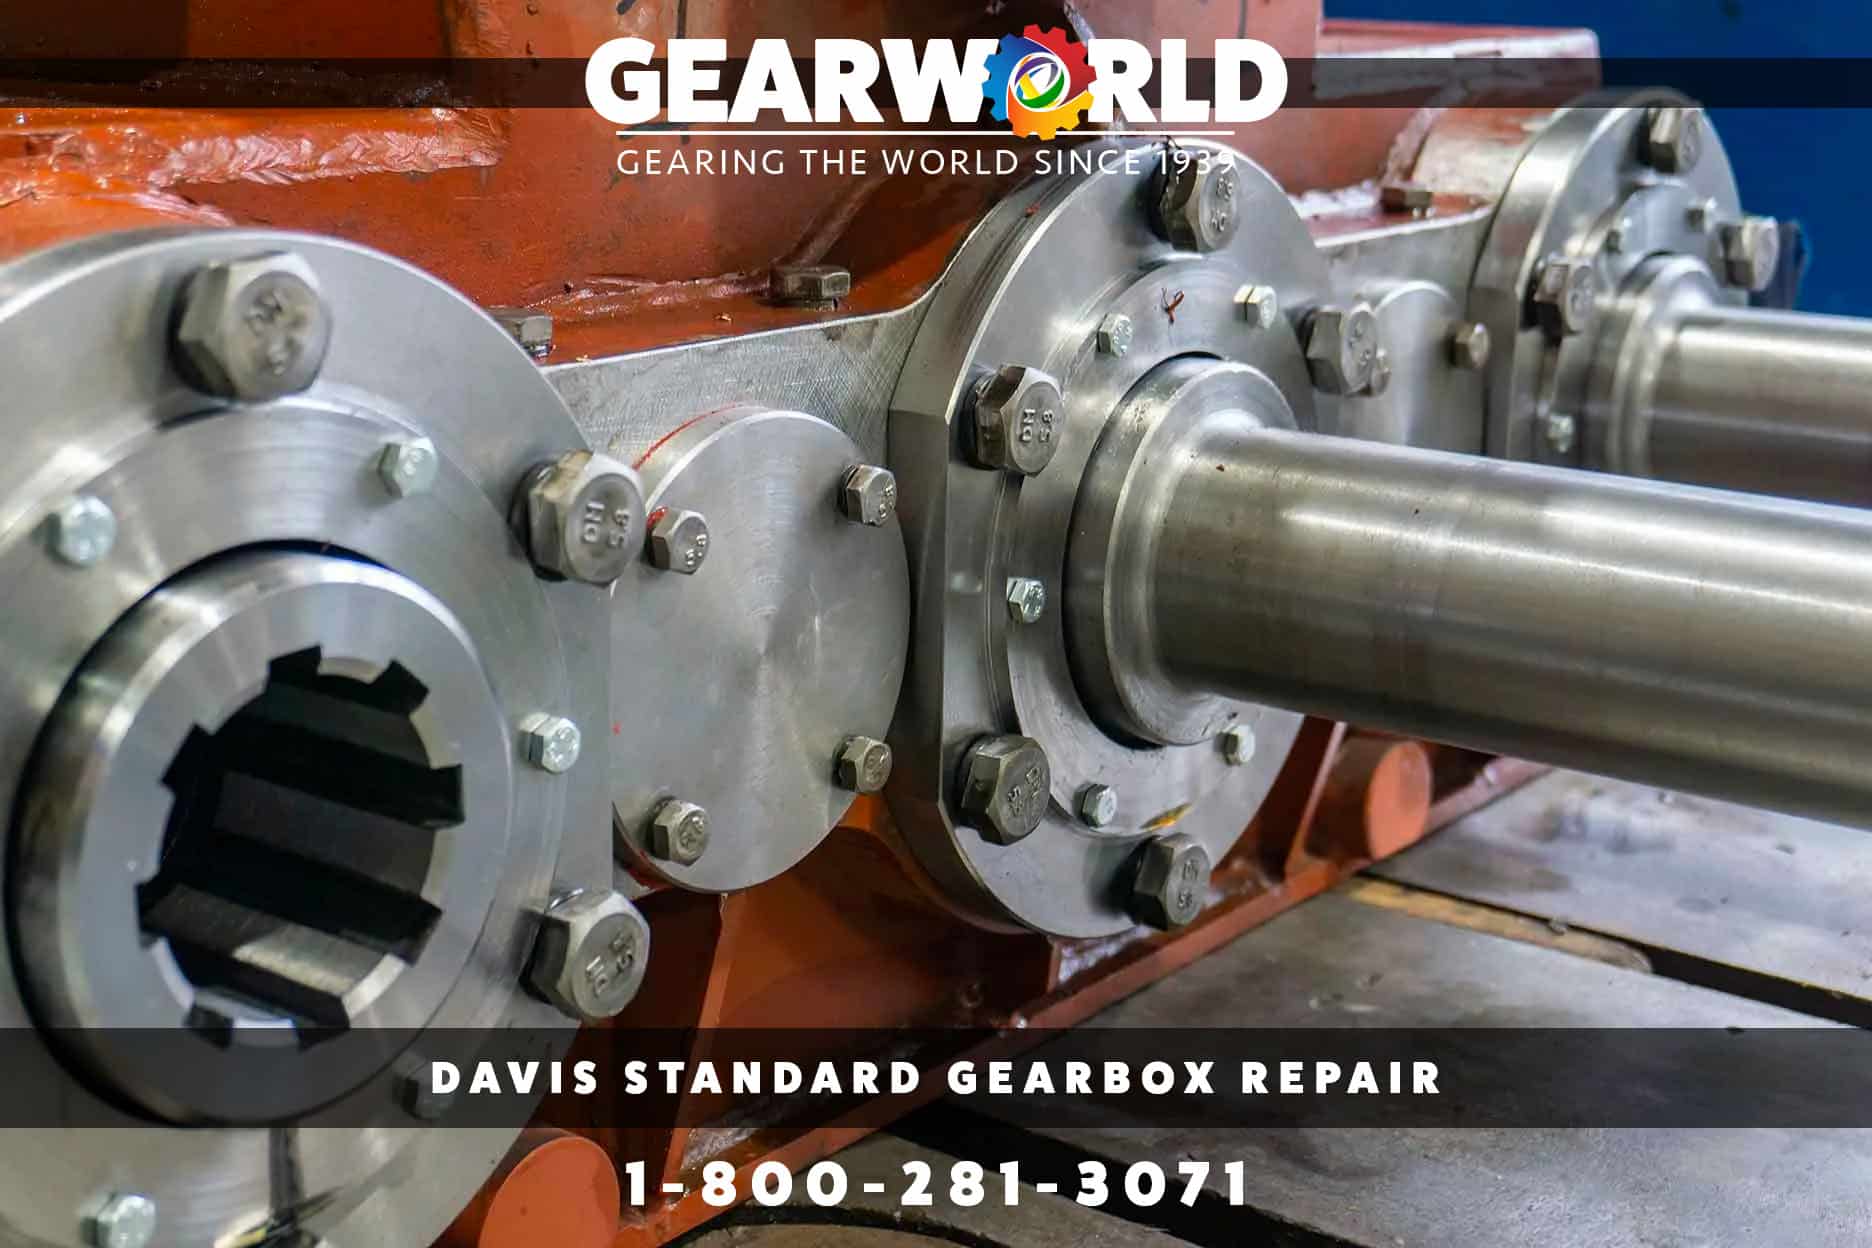 Davis Standard Gearbox Repair